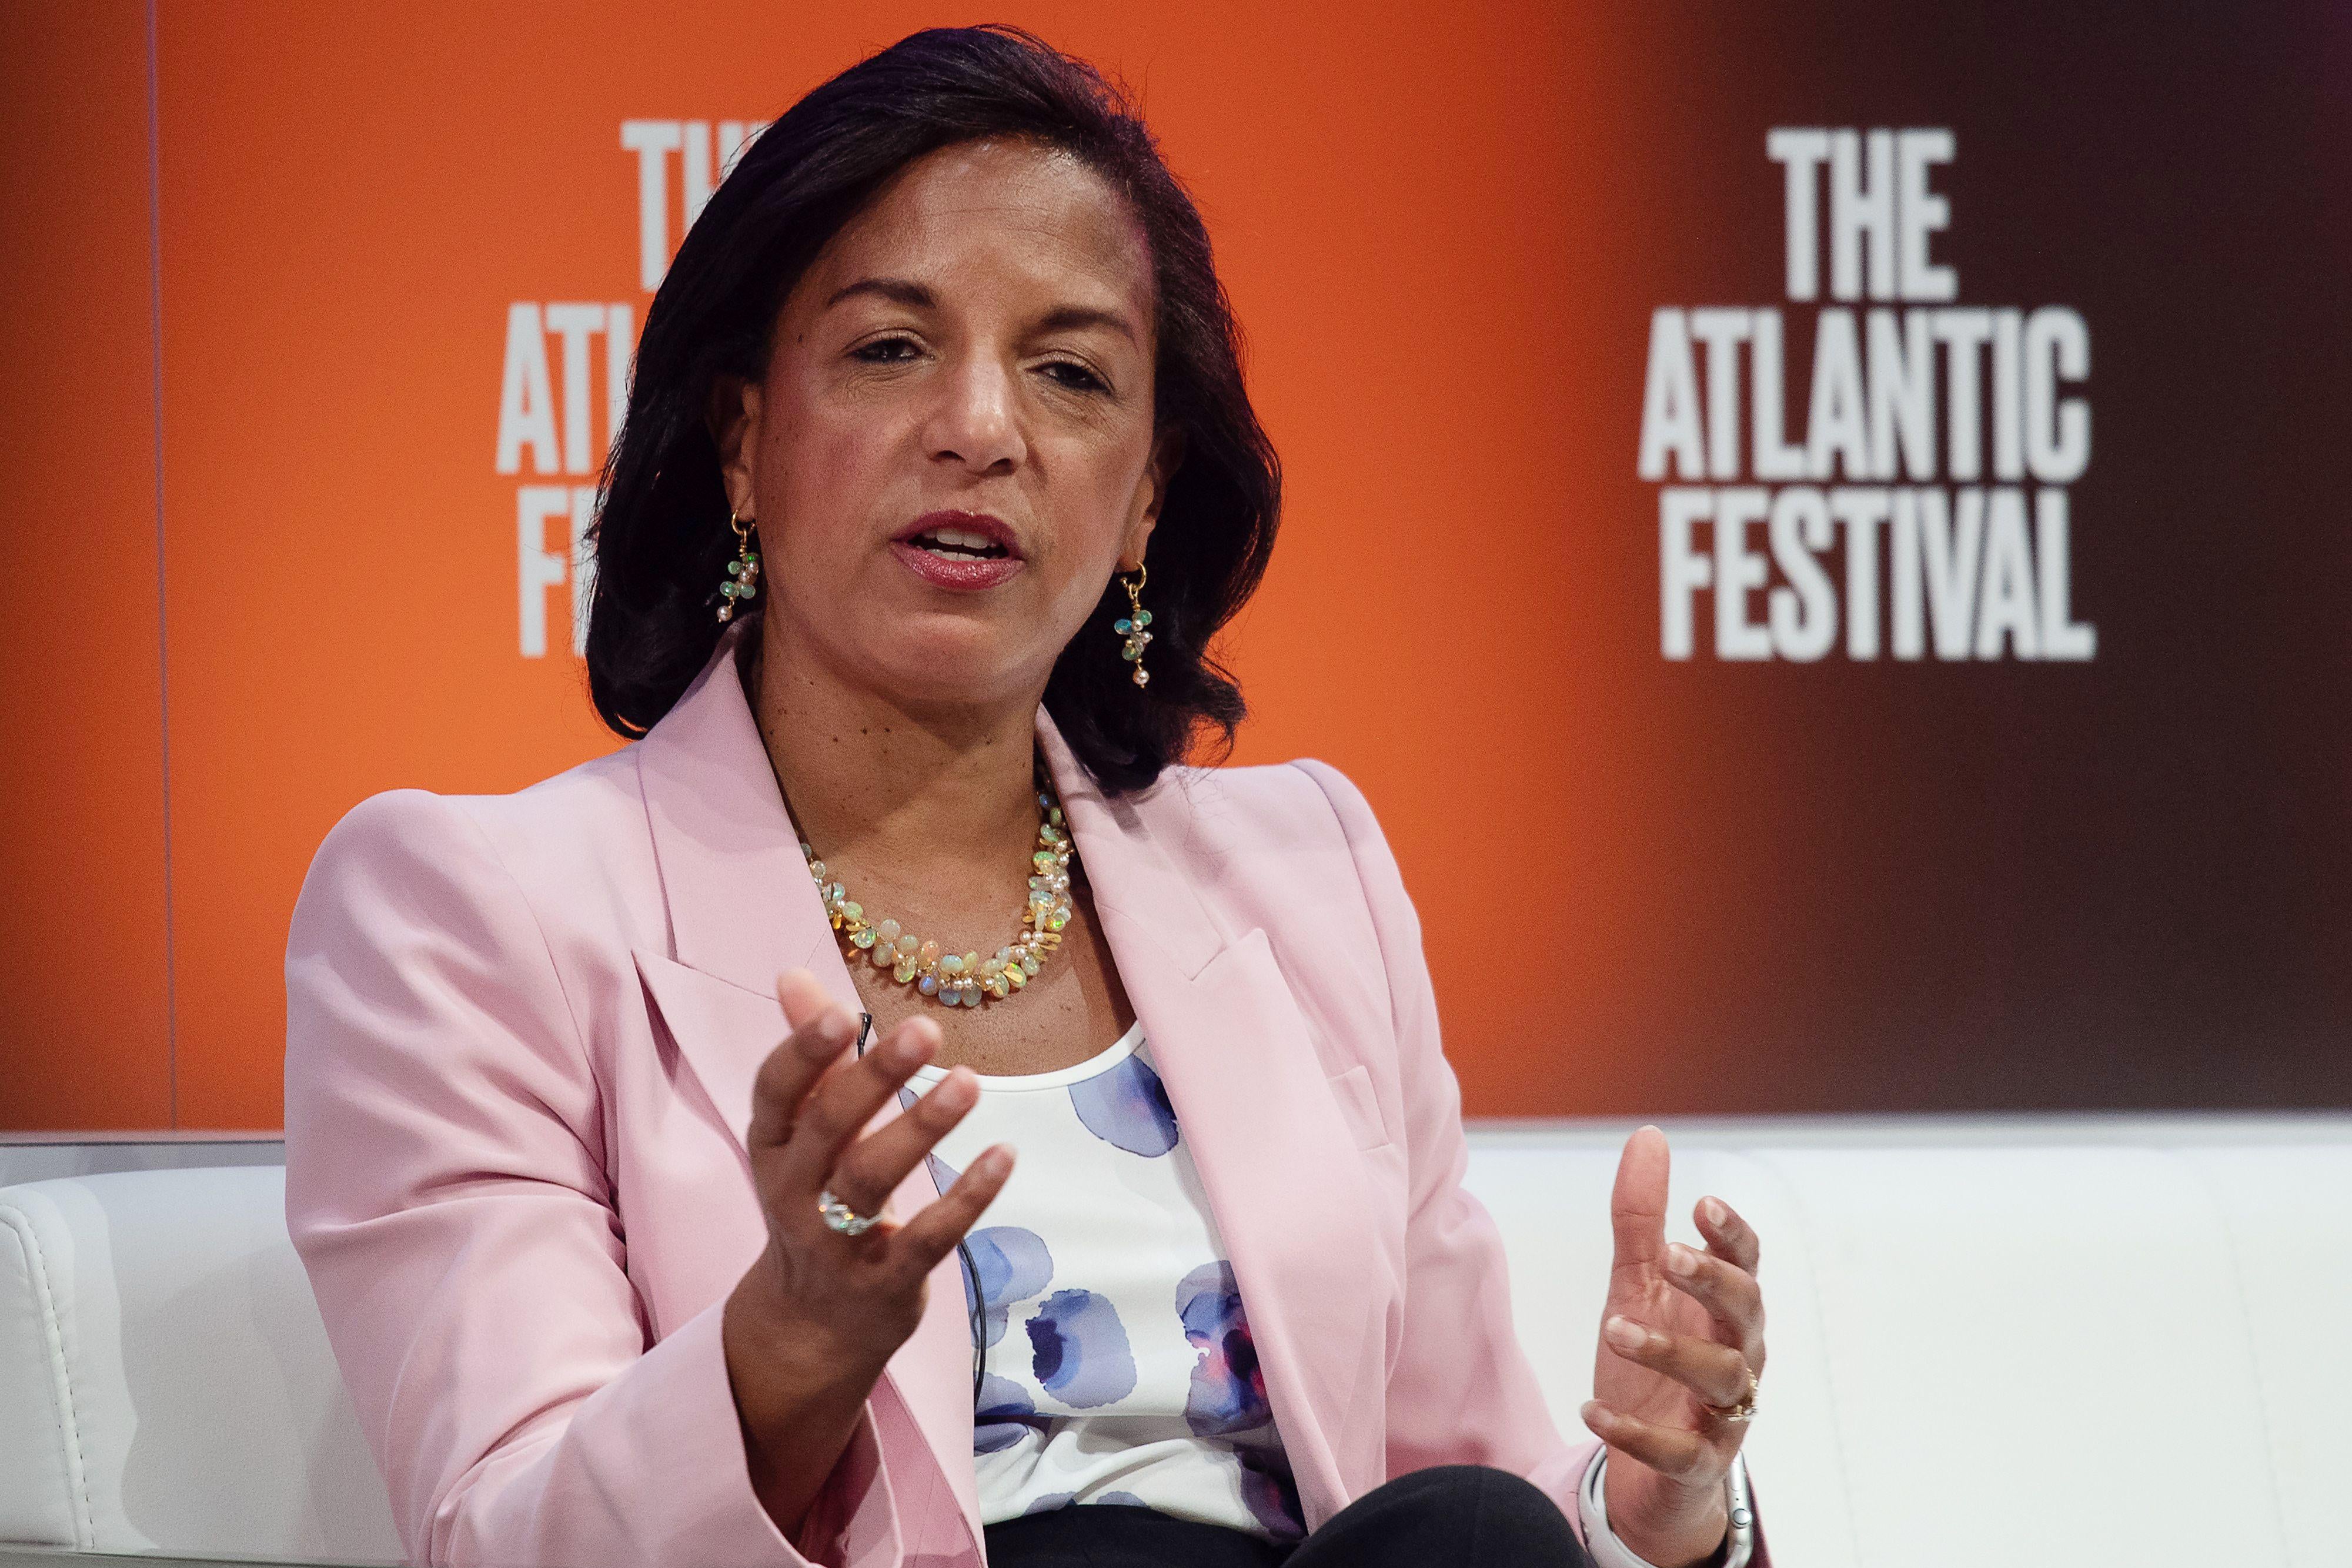 Former national security adviser Susan Rice speaks at the Atlantic Festival in Washington, D.C. on September 25, 2019. 